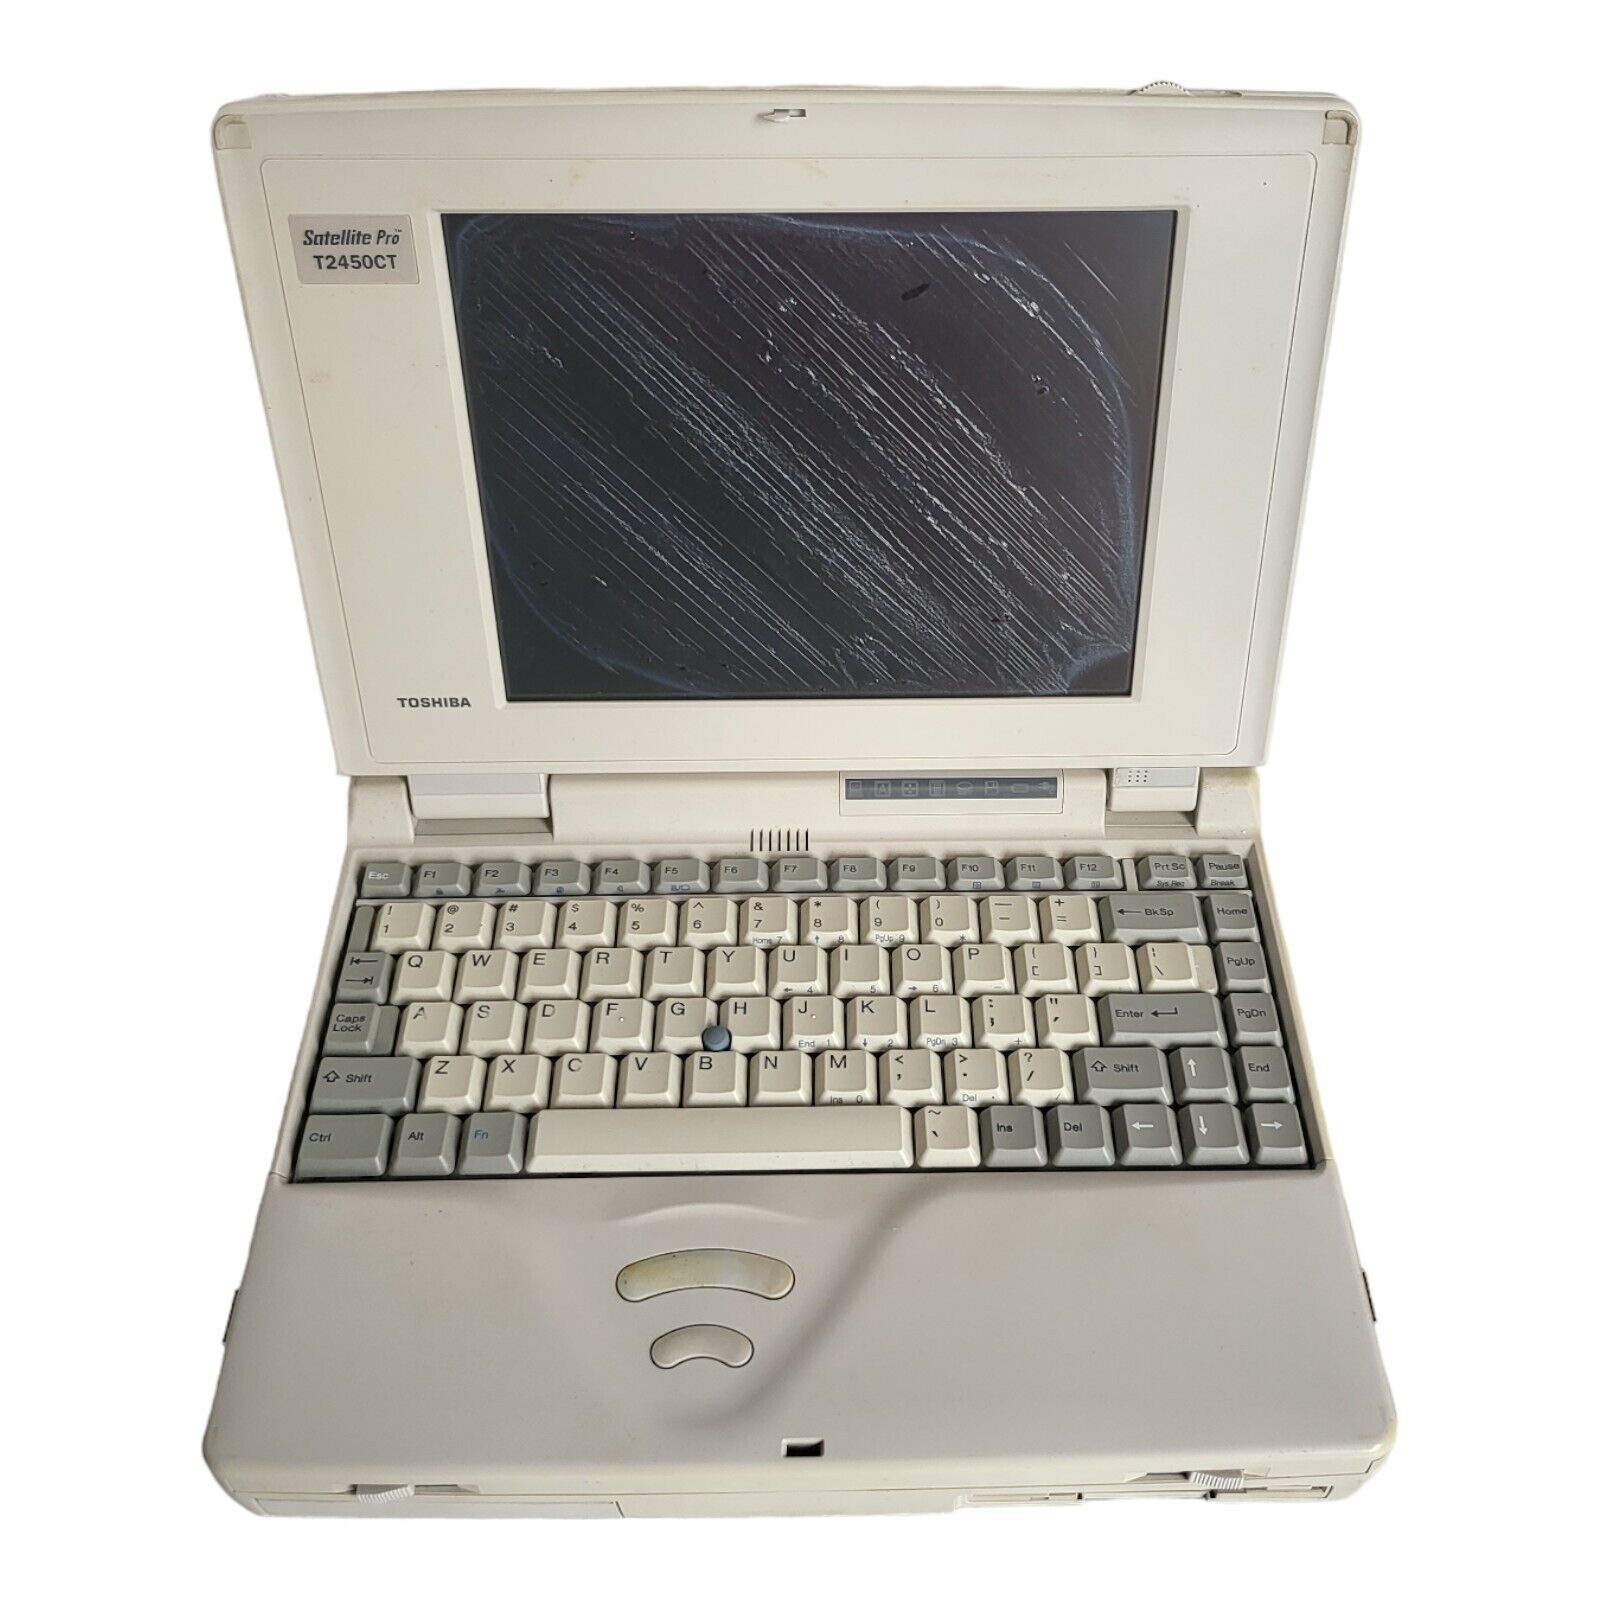 Rare Vintage Toshiba Satellite Pro T2450CT Retro Laptop Floppy Drive - UNTESTED